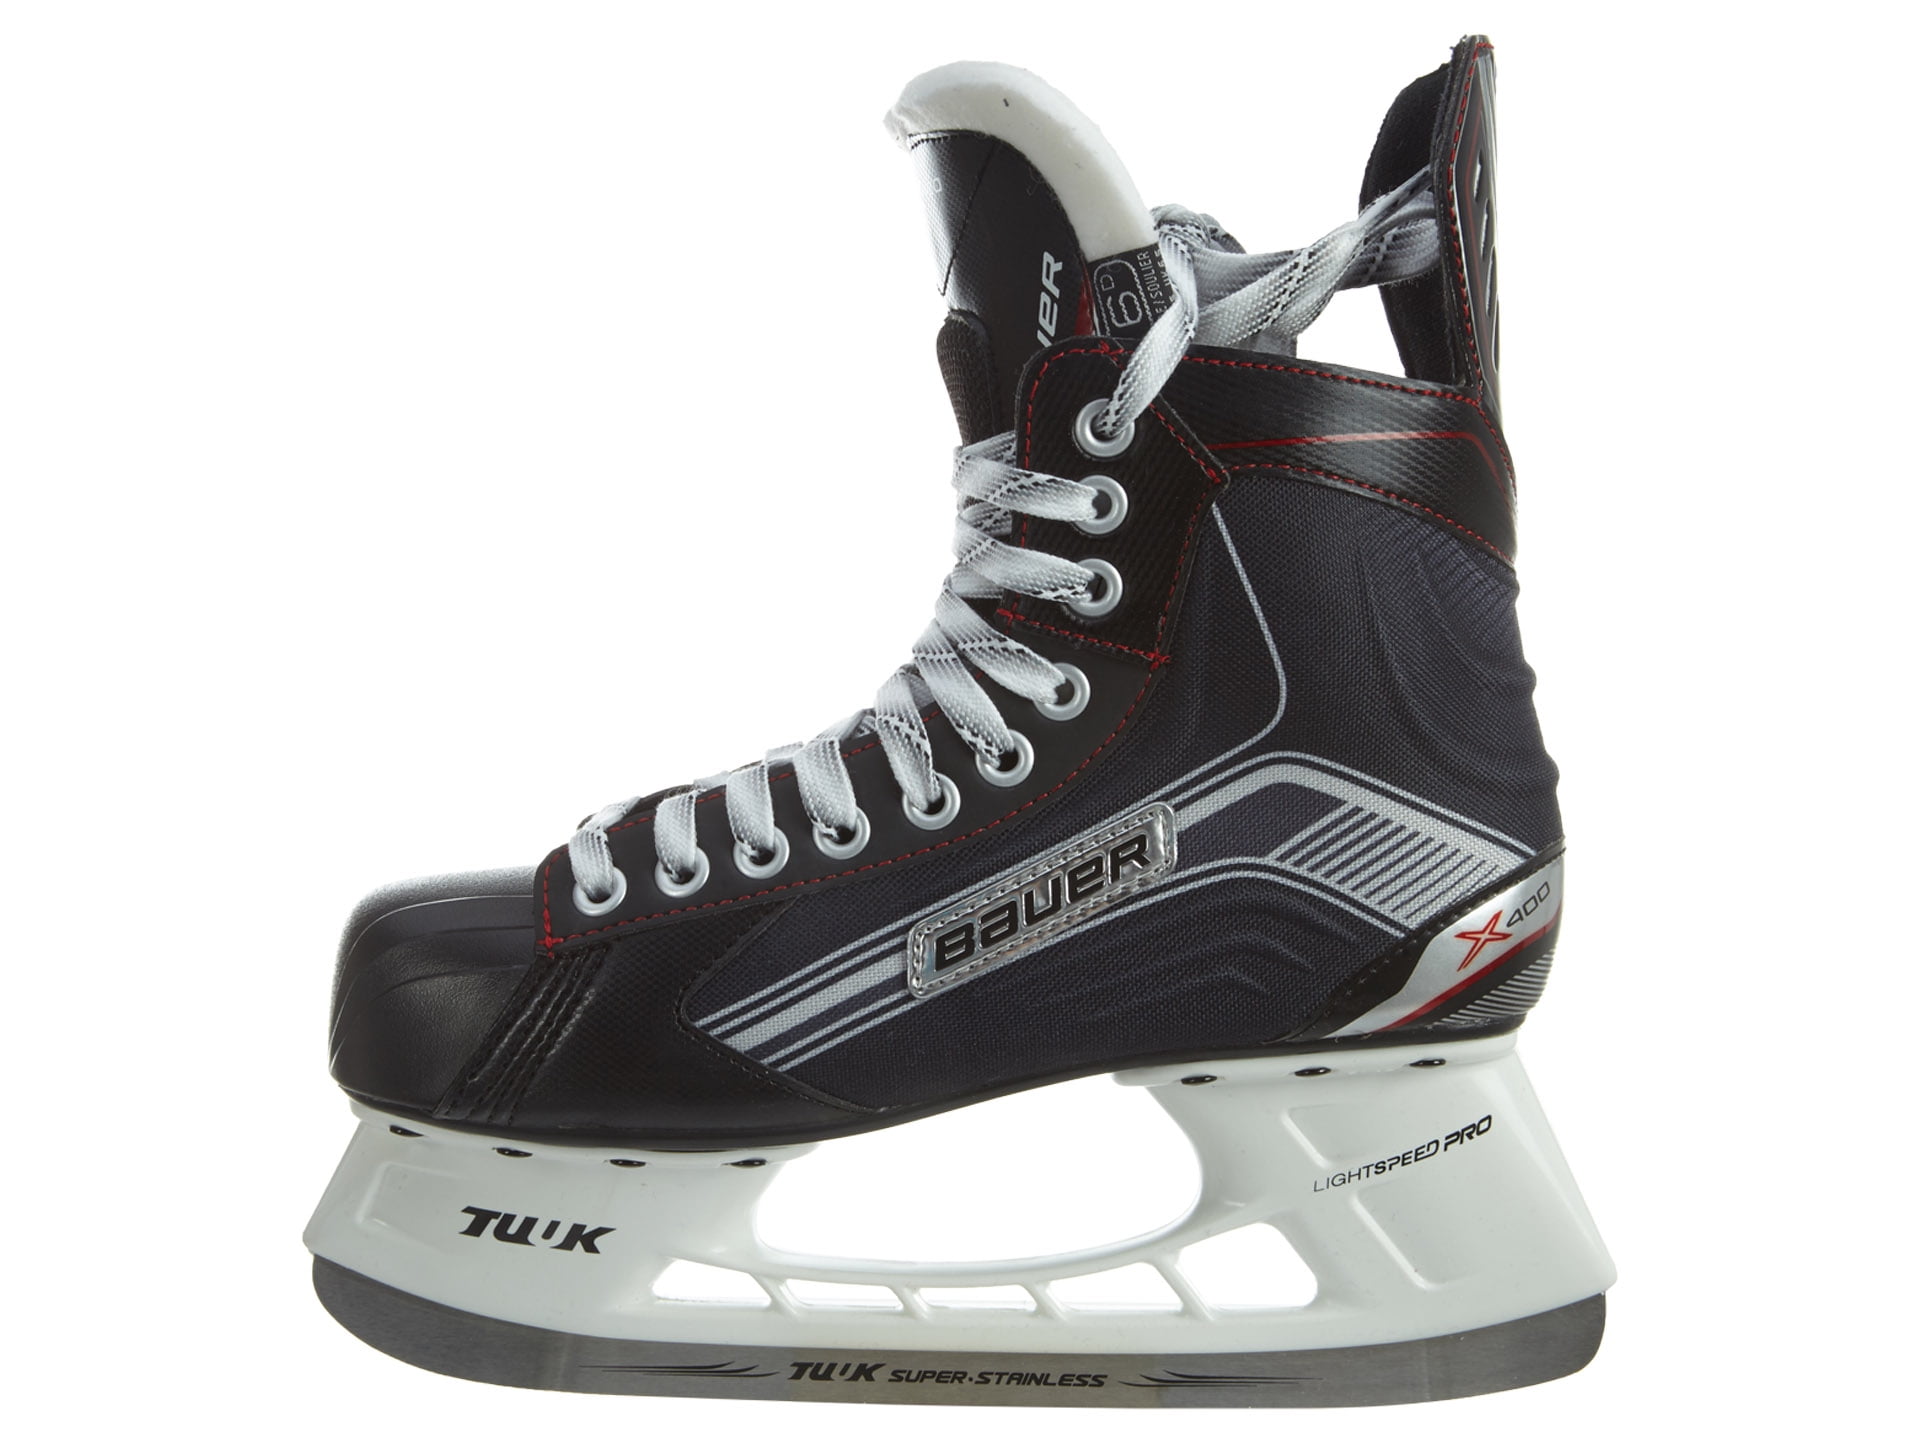 Senior Size Bauer Vapor X400 Ice Hockey Skates 